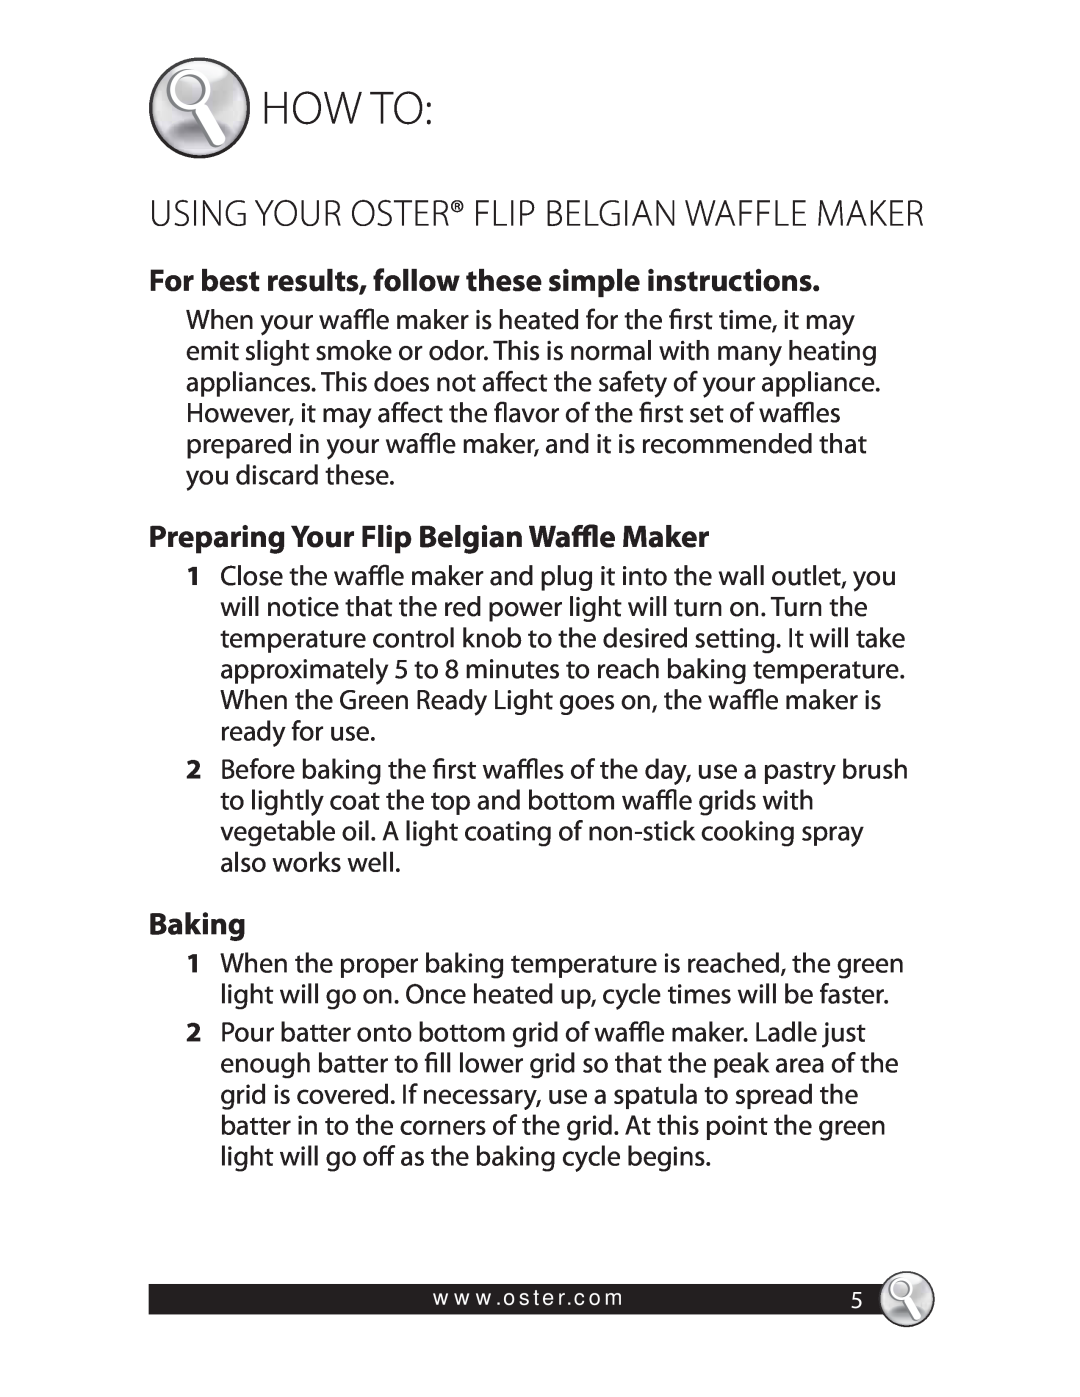 Oster CKSTWFBF20 How To, Preparing Your Flip Belgian Waffle Maker, Baking, Using Your Oster Flip Belgian Waffle Maker 